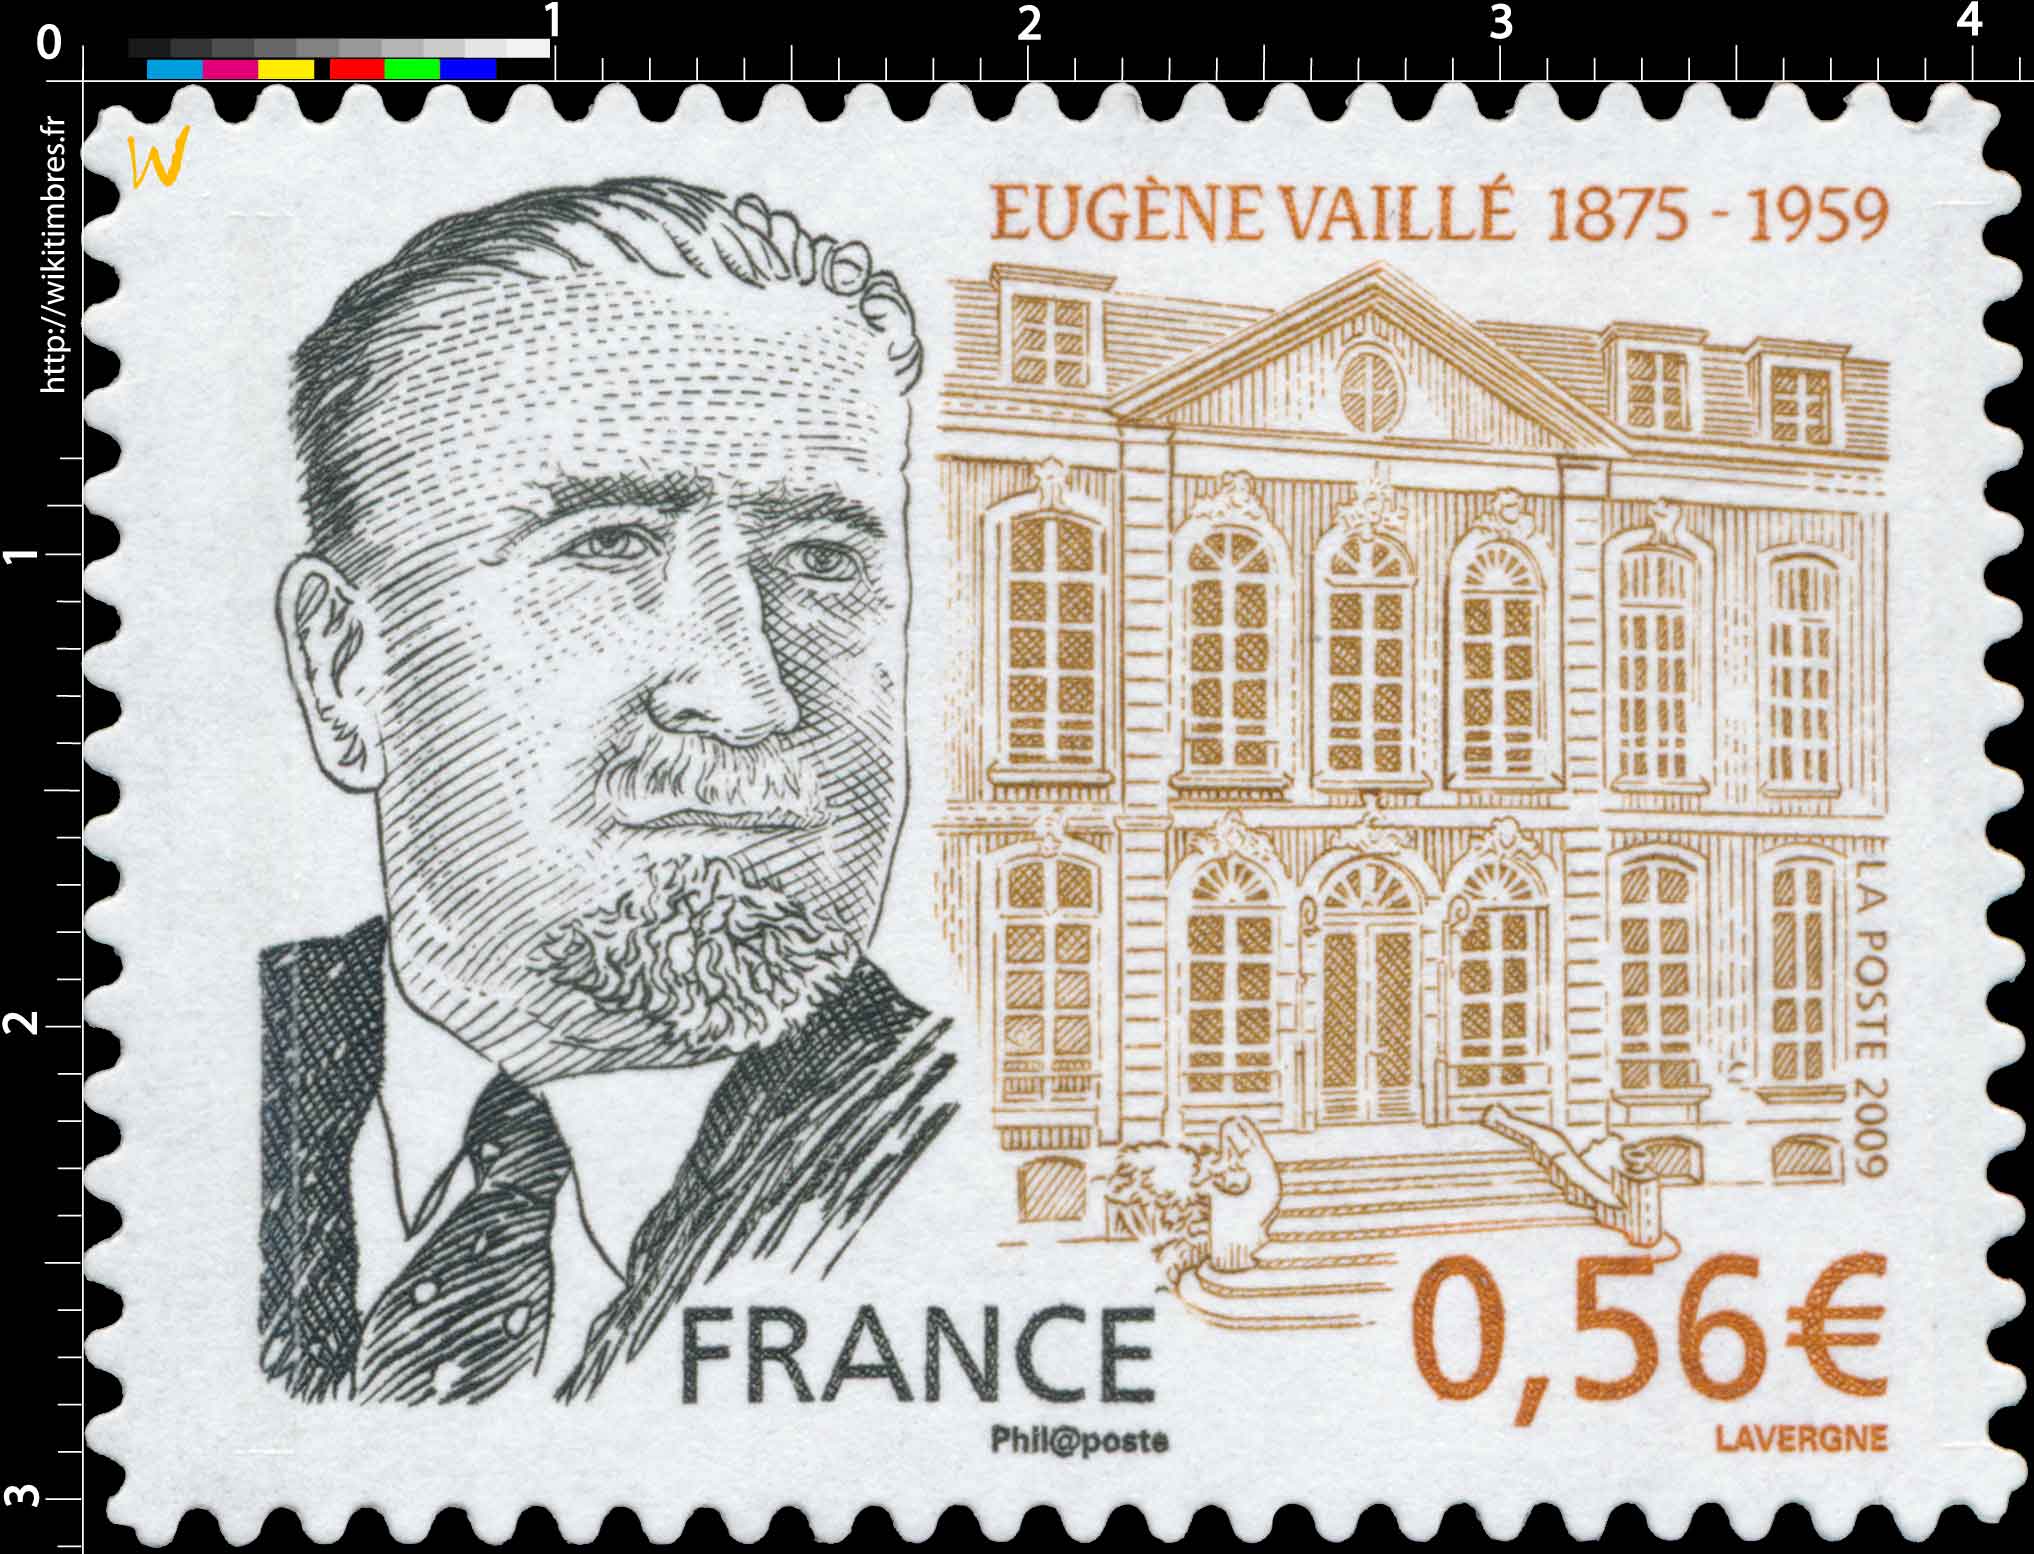 2009 EUGÈNE VAILLÉ 1875-1959